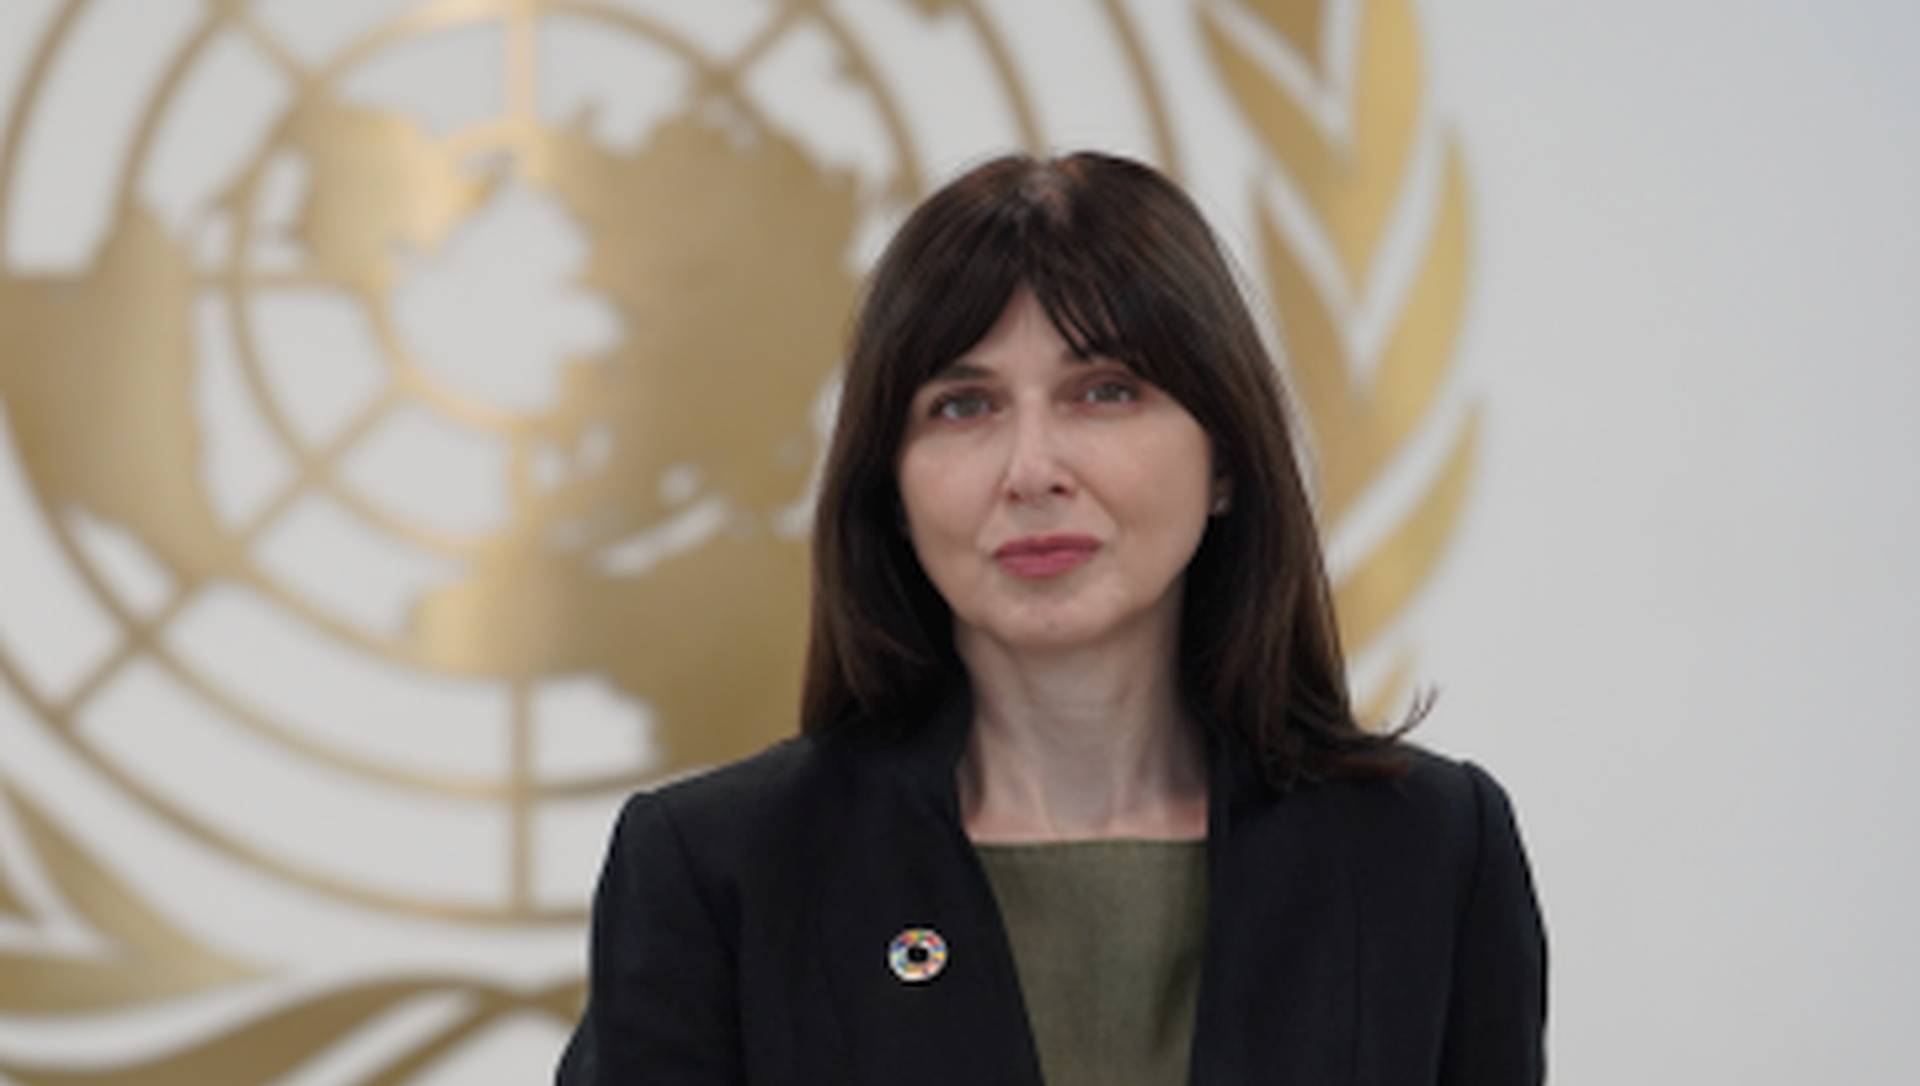 Владанка Андреевна координатор ООН в Азербайджане. - Sputnik Азербайджан, 1920, 03.07.2021